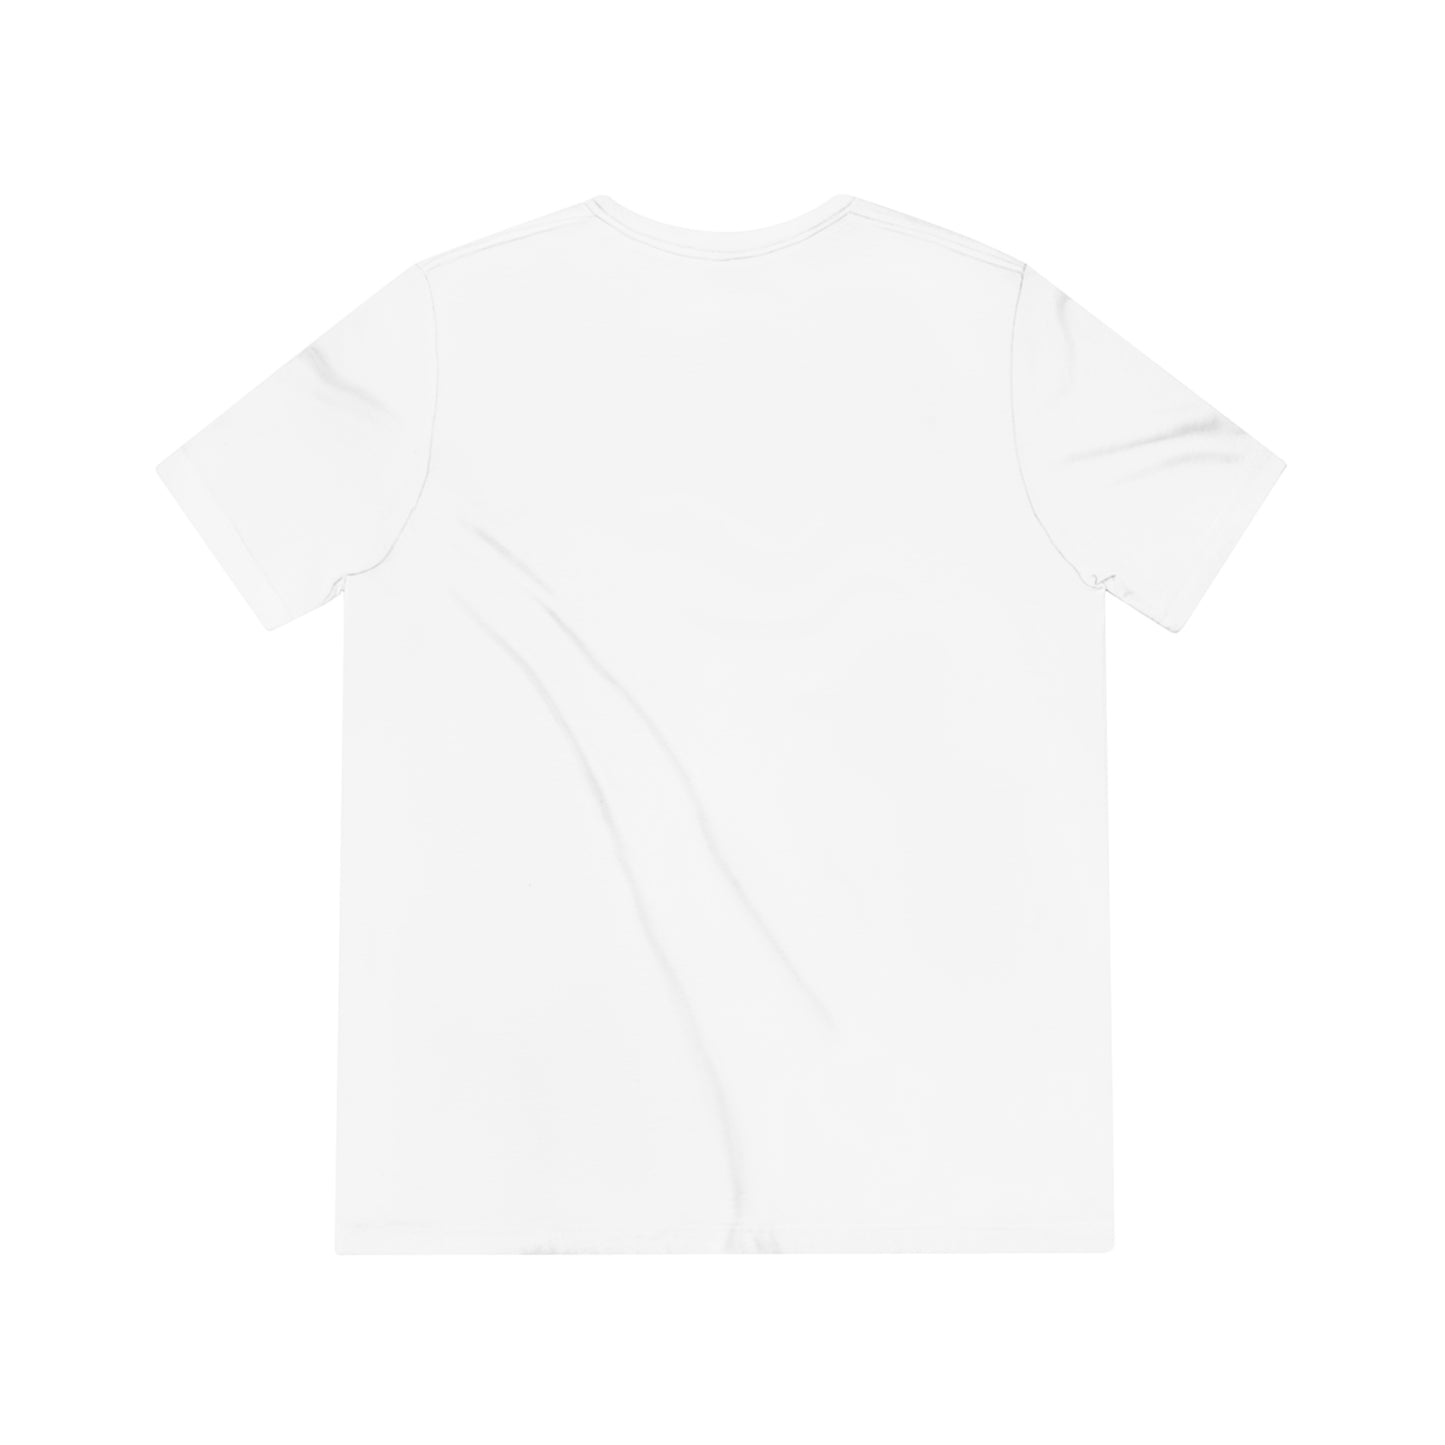 ANPAD T - Shirt- Tree Design /White